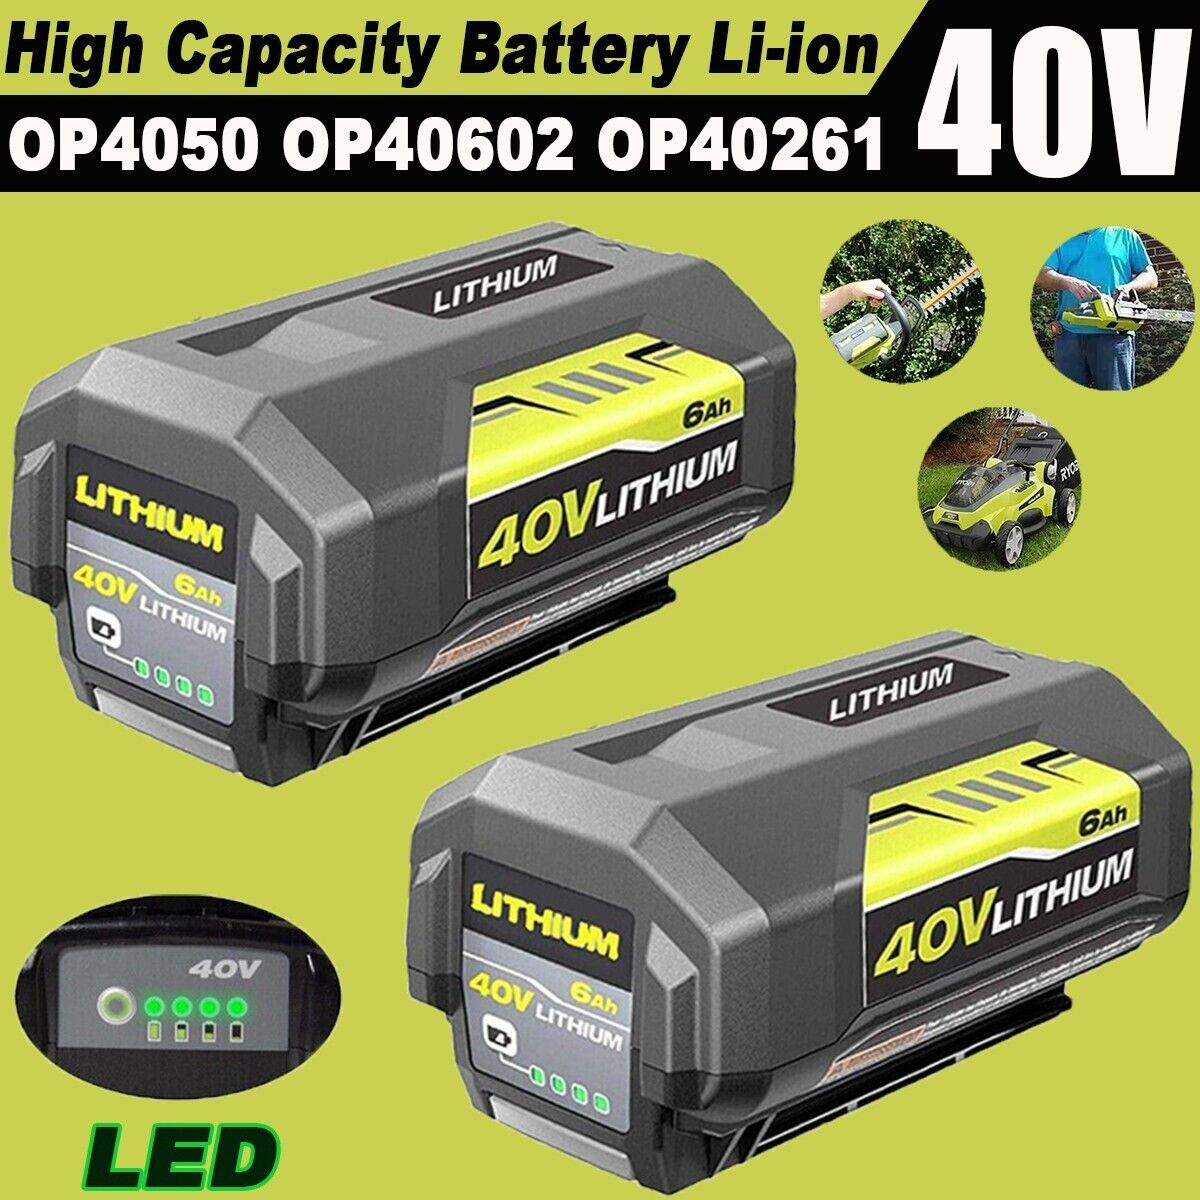 Ryobi 2X 40Volt 6.0Ah Battery For Ryobi OP4050 Extend OP40602 HighCapacity Lithium-Ion